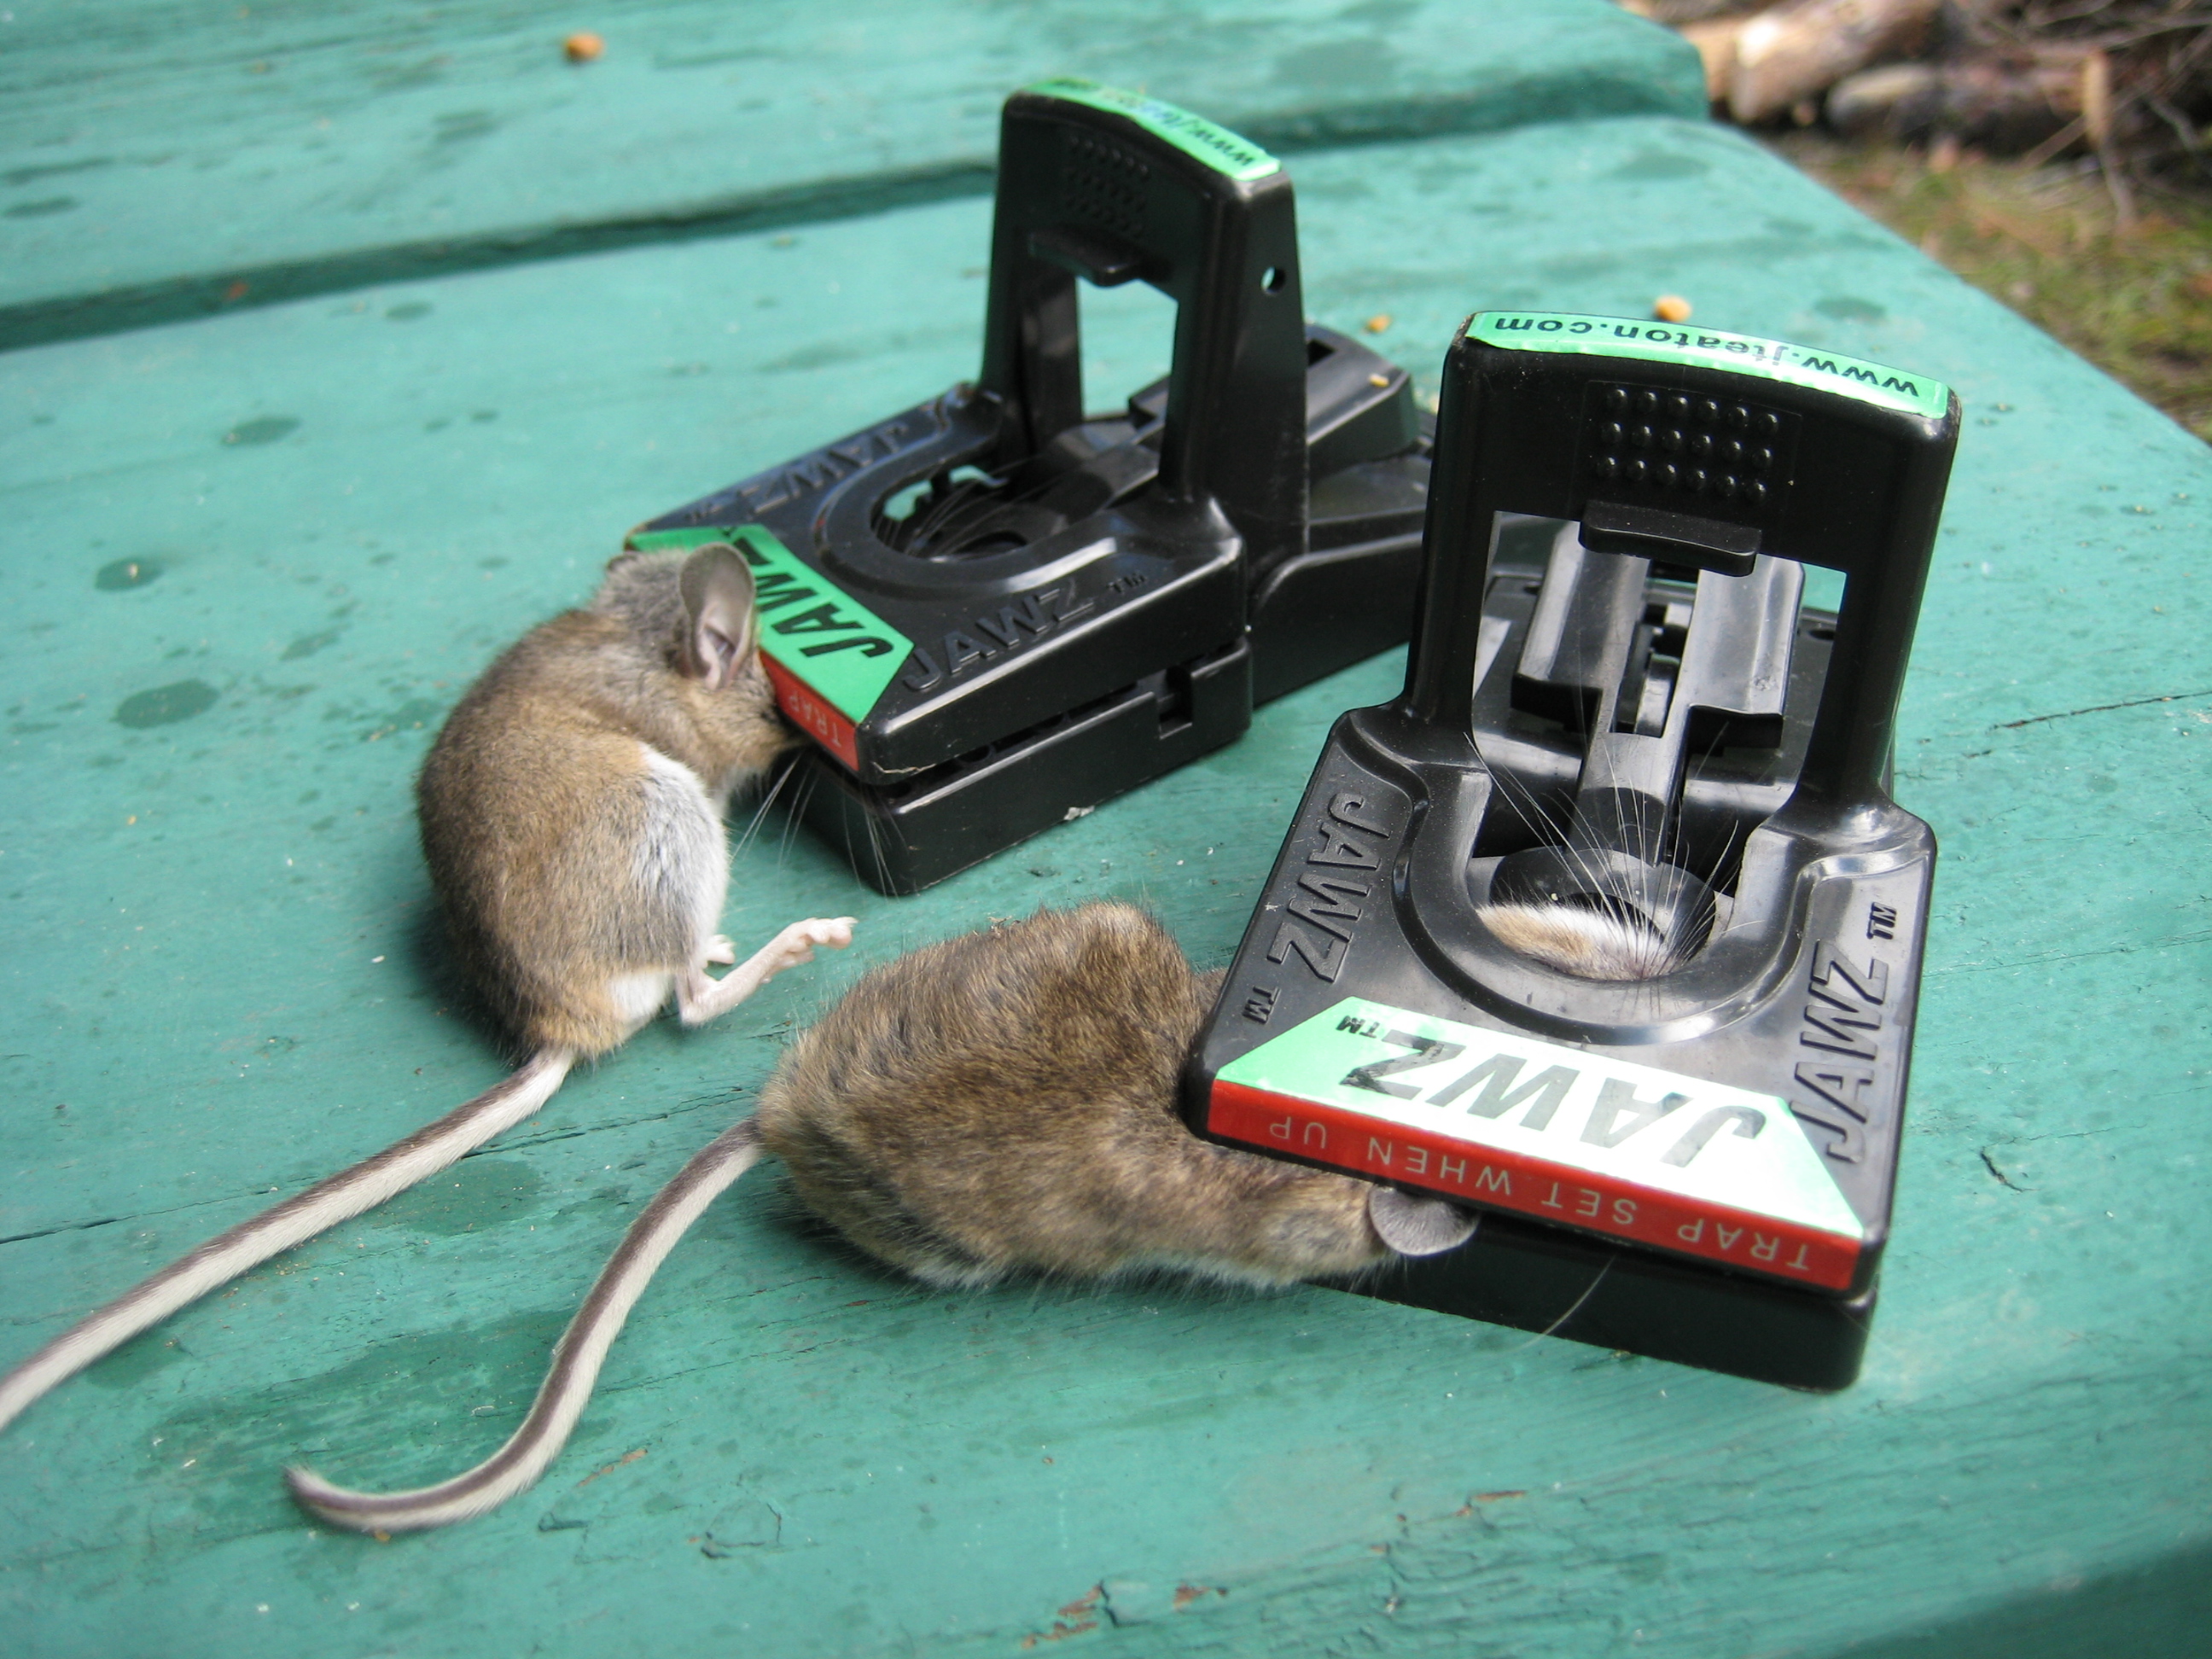 Jawz Mouse Trap